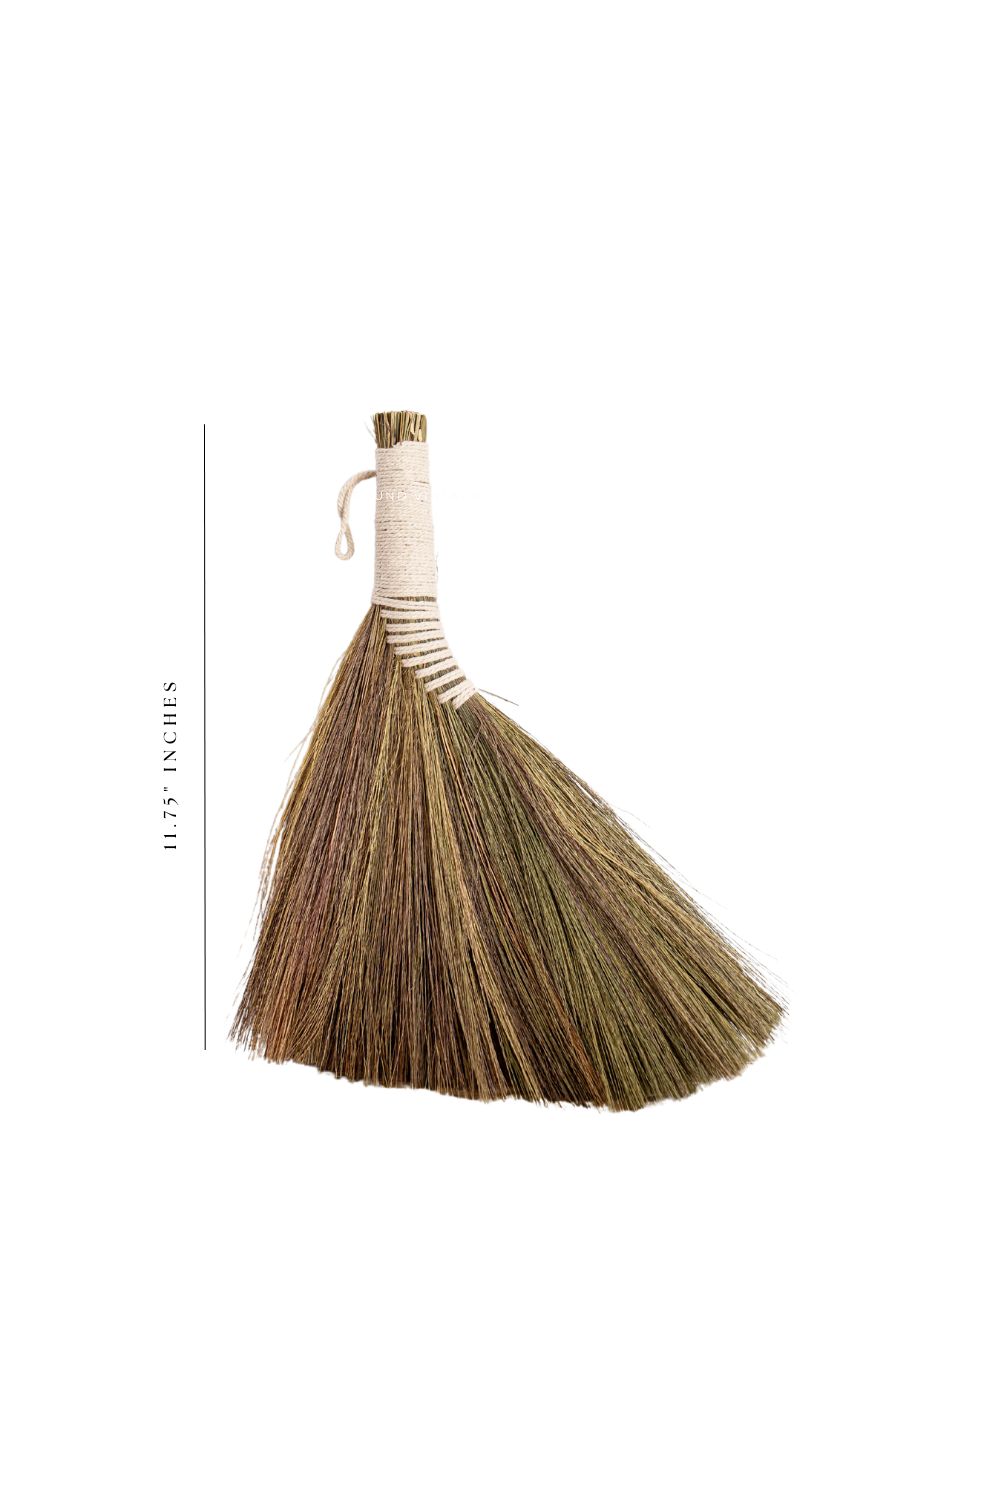 Handmade Brooms Tuxedo - Luxe B Co